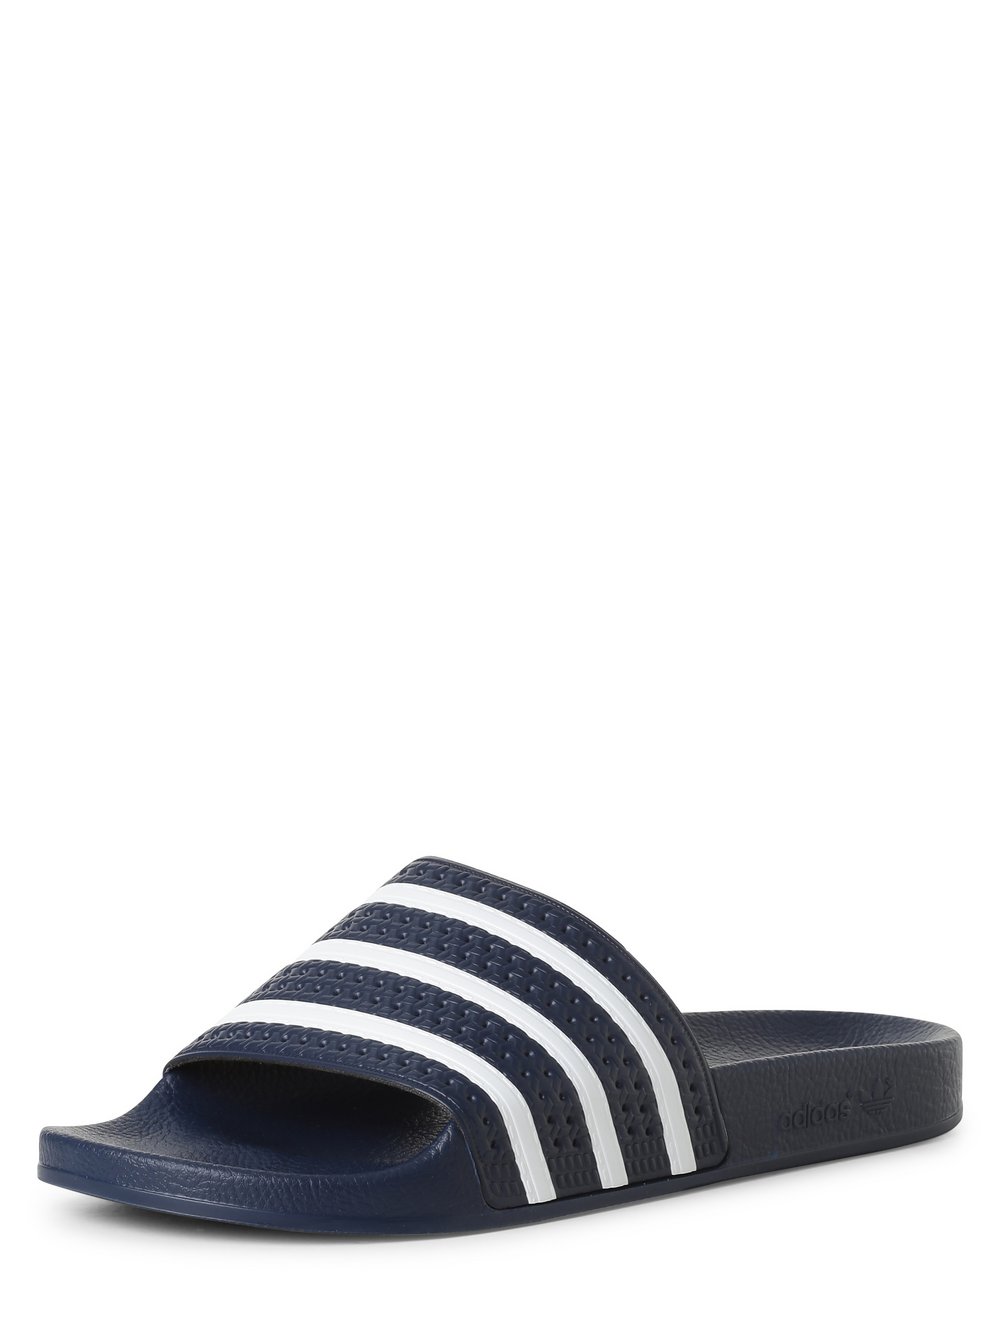 Adidas Originals - Męskie pantofle kąpielowe – Adilette, niebieski